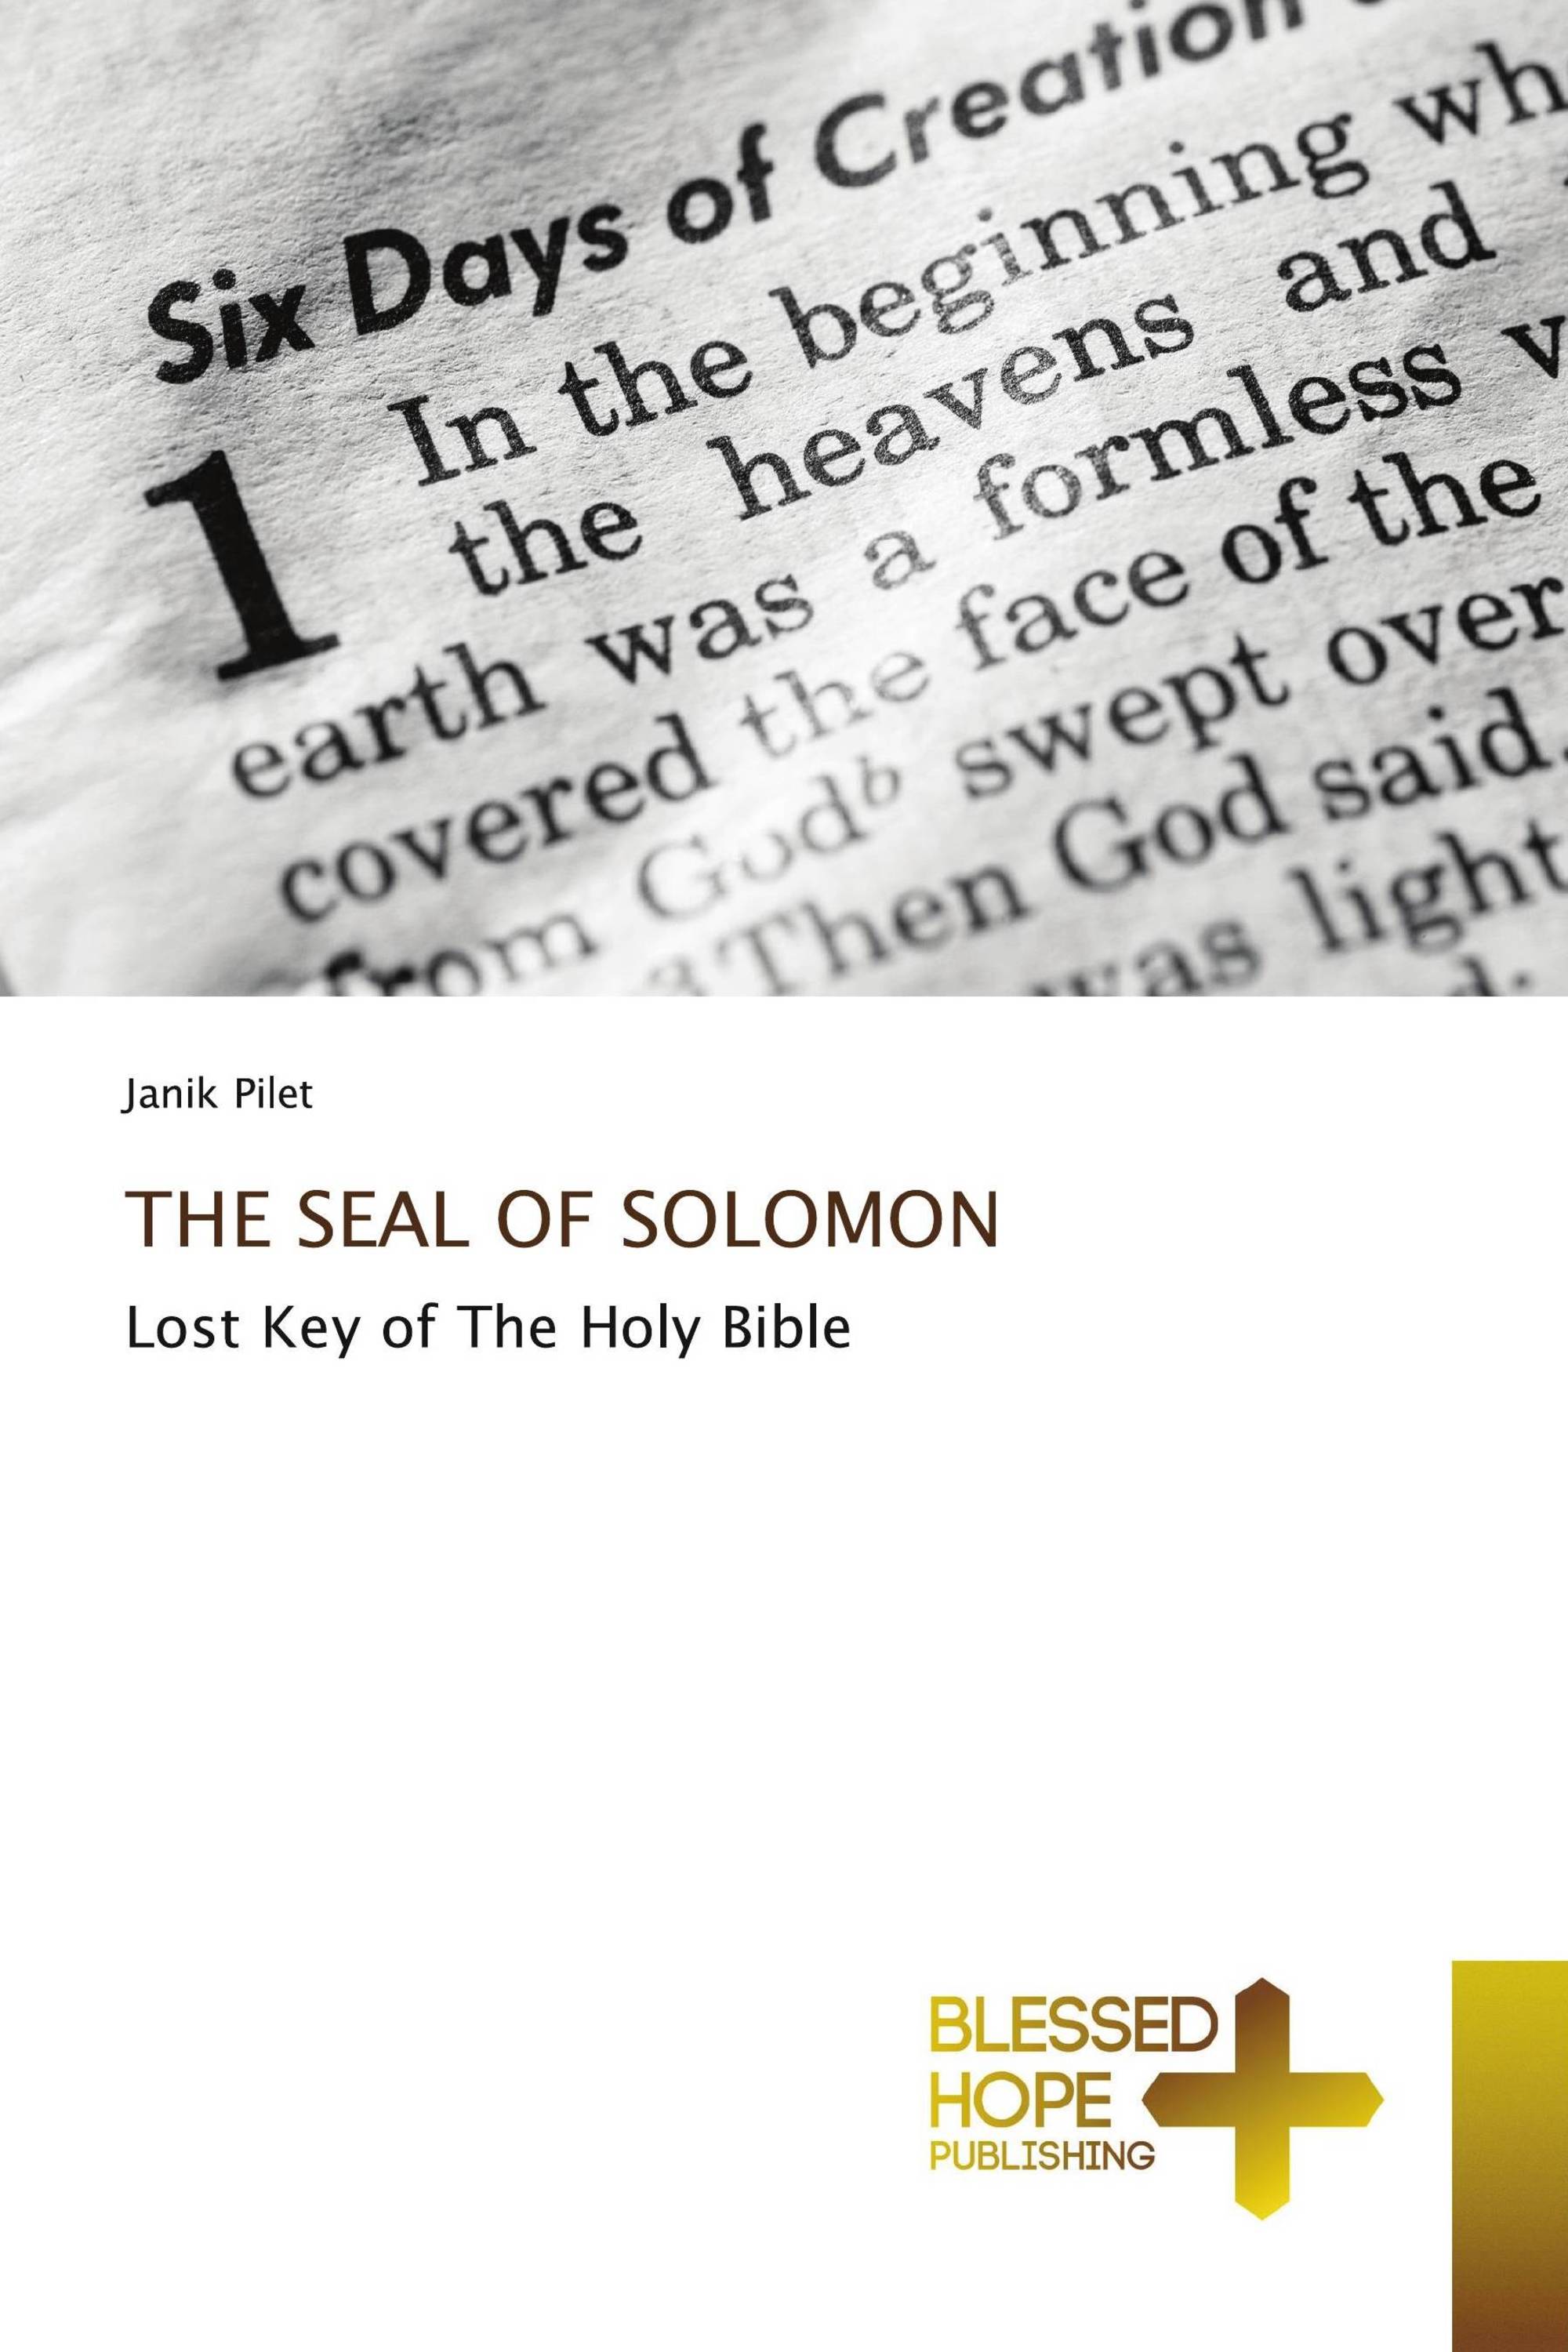 THE SEAL OF SOLOMON